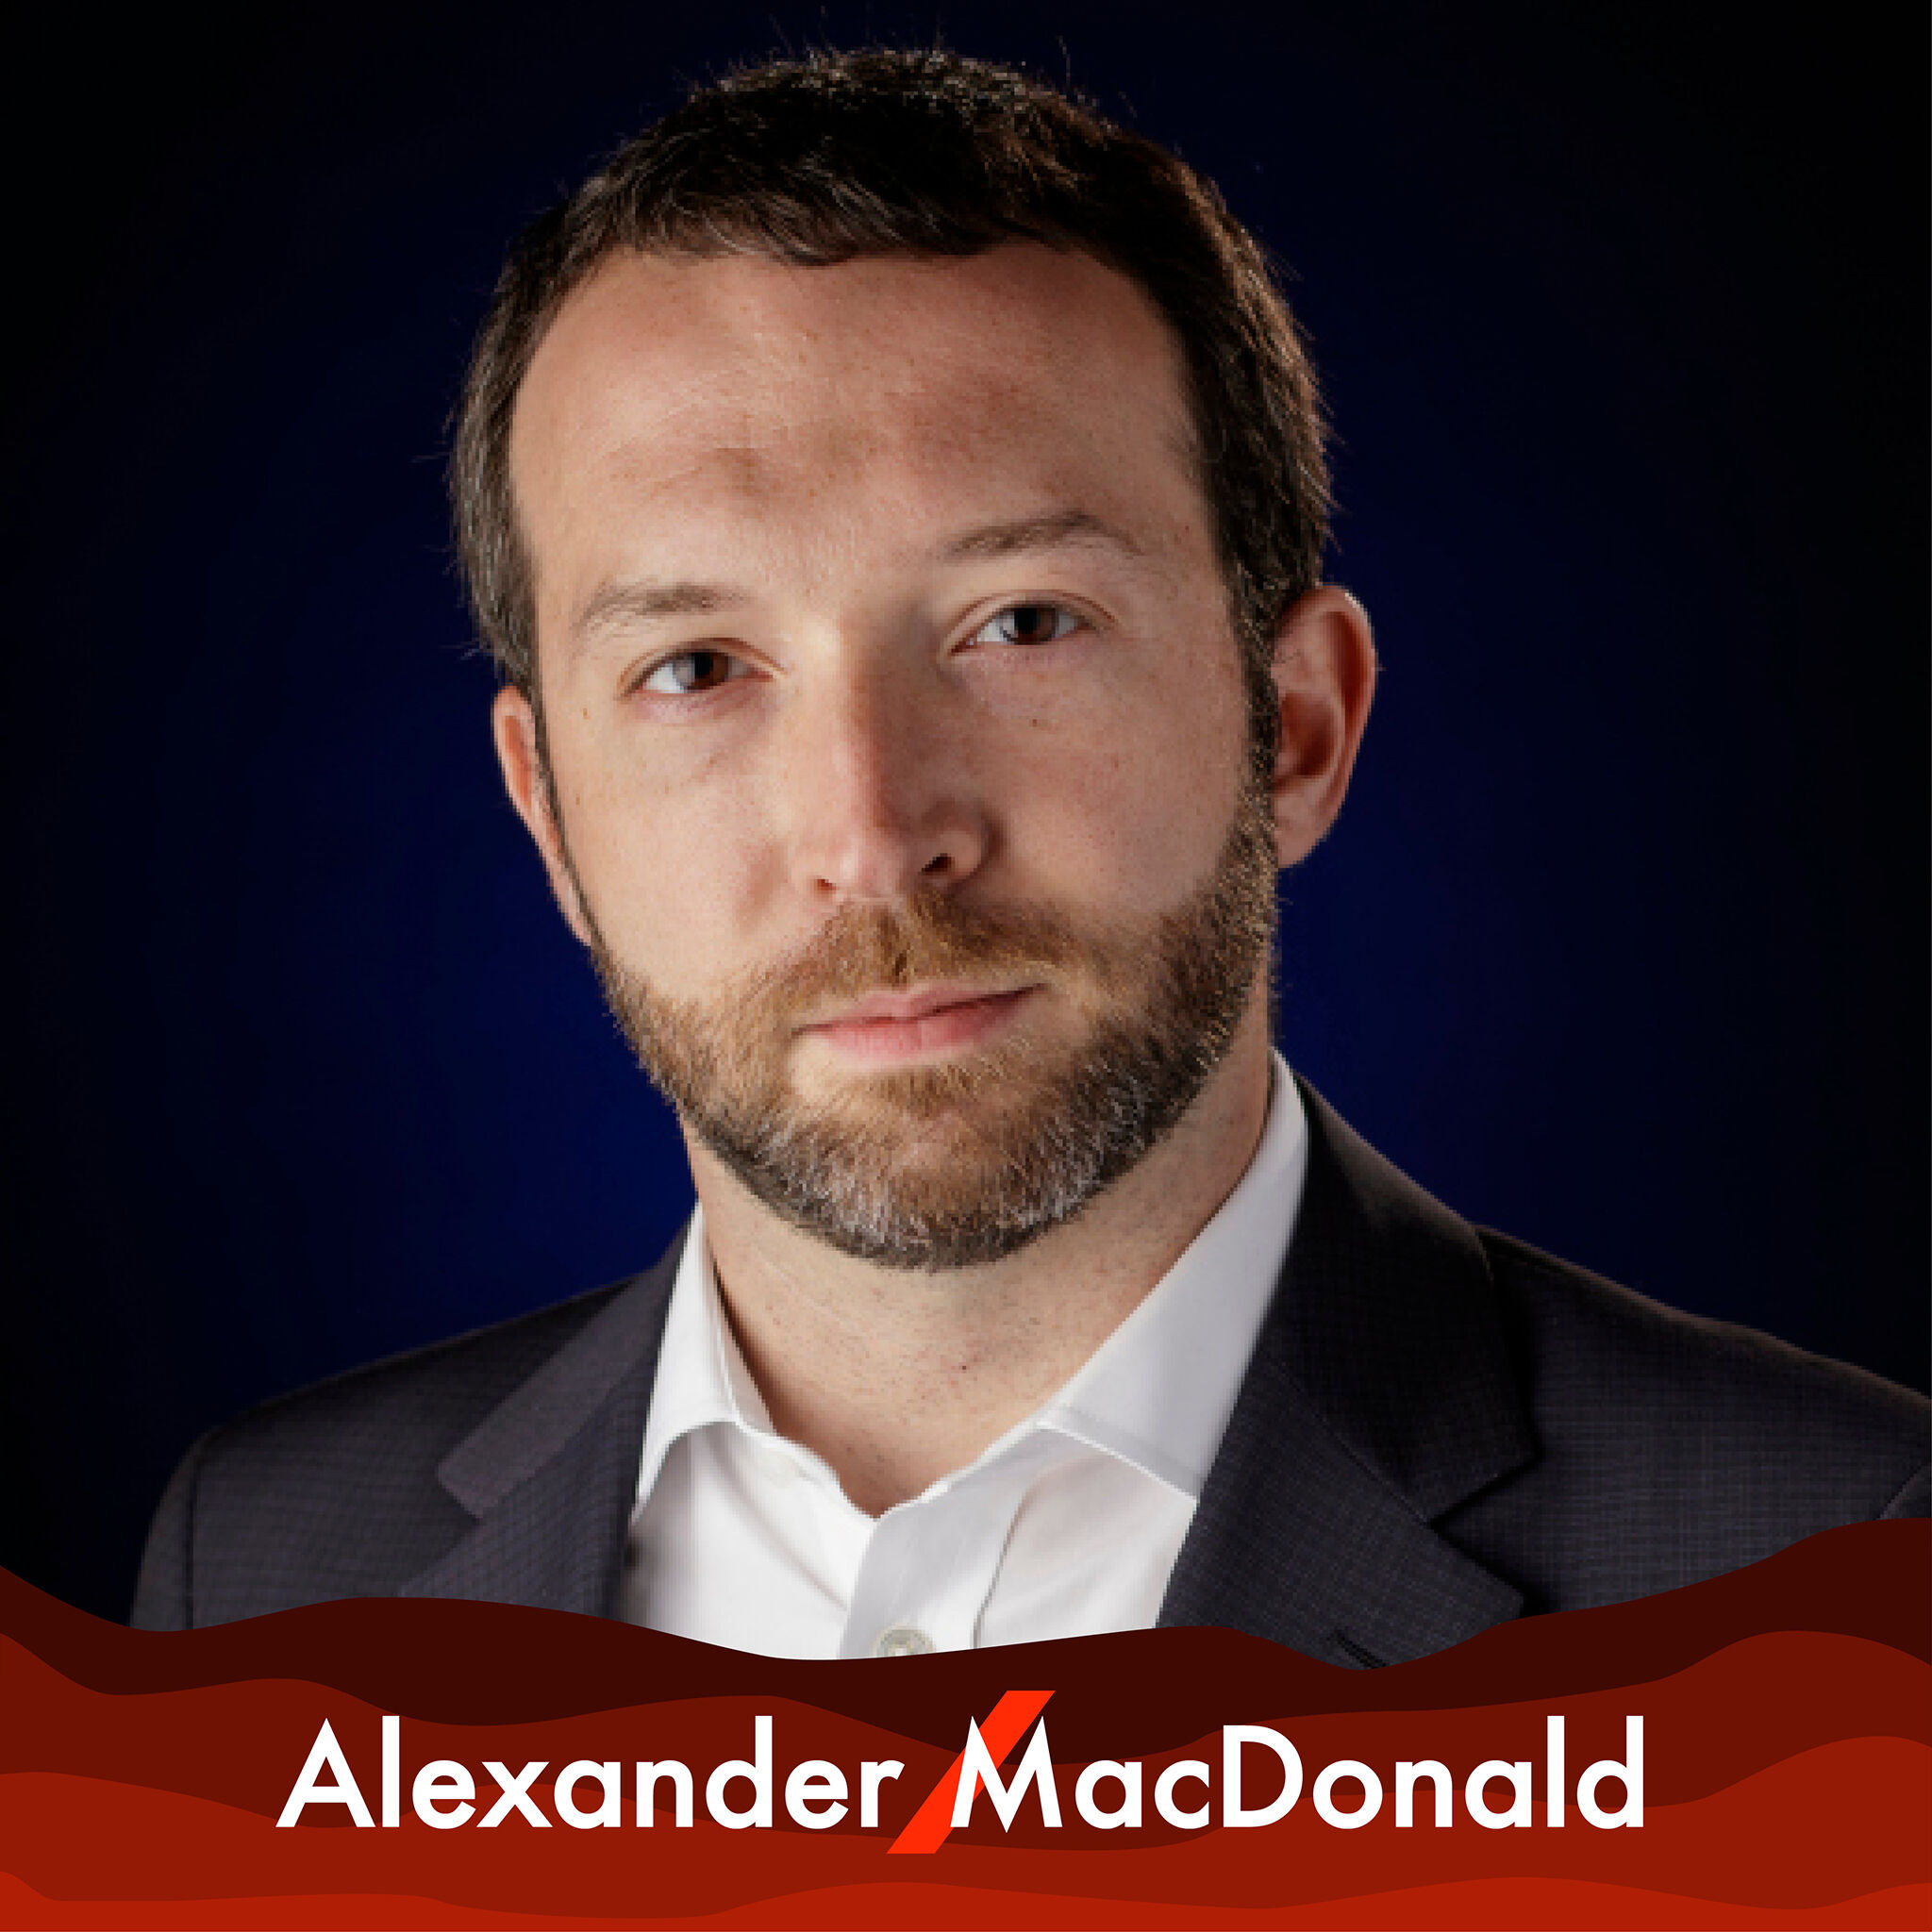 A picture of Alexander MacDonald